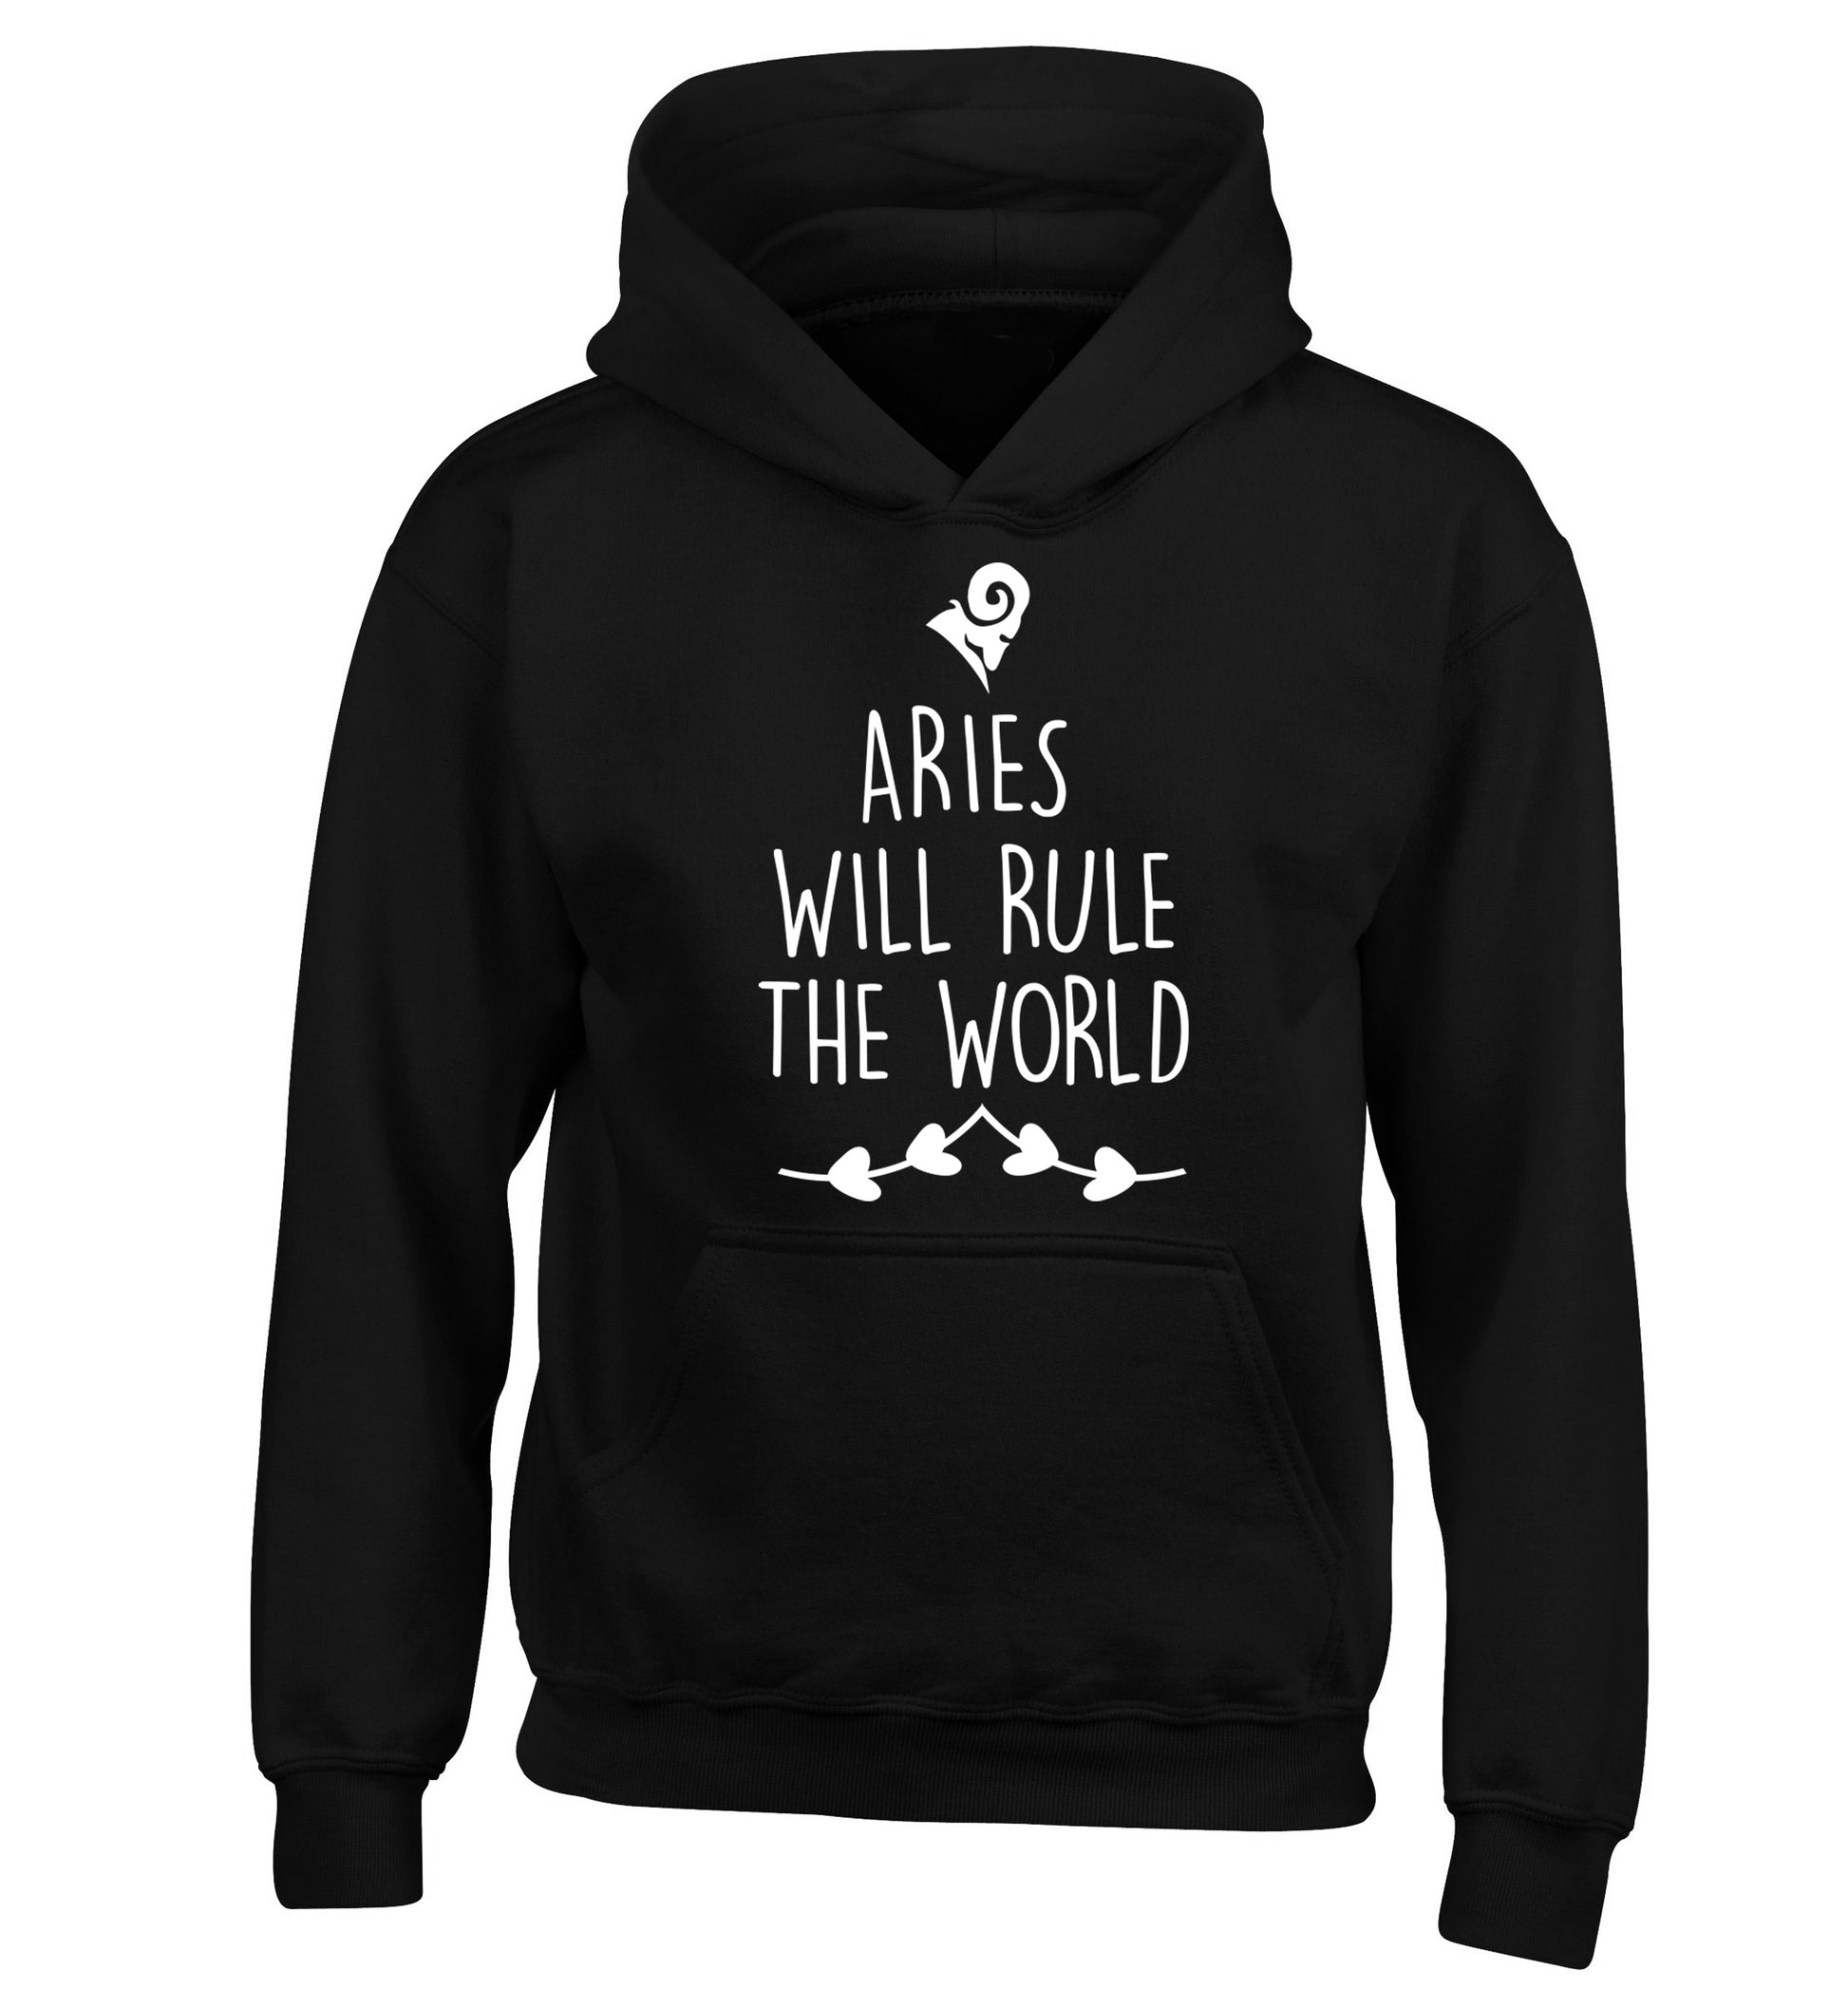 Aries will rule the world children's black hoodie 12-13 Years